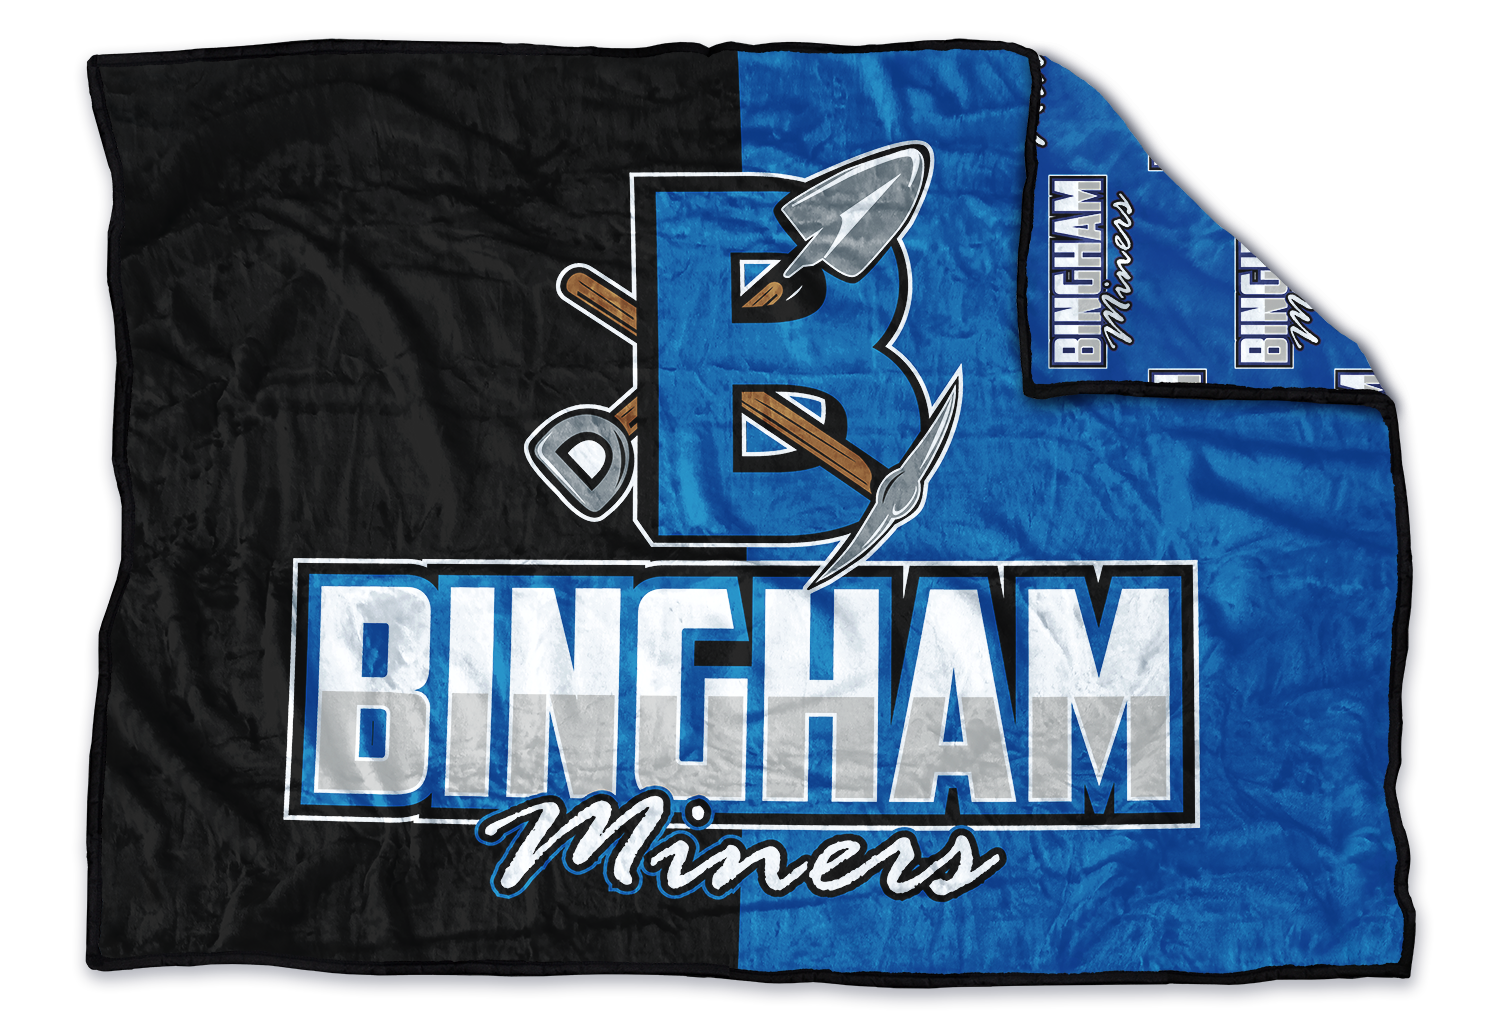 Bingham Miners